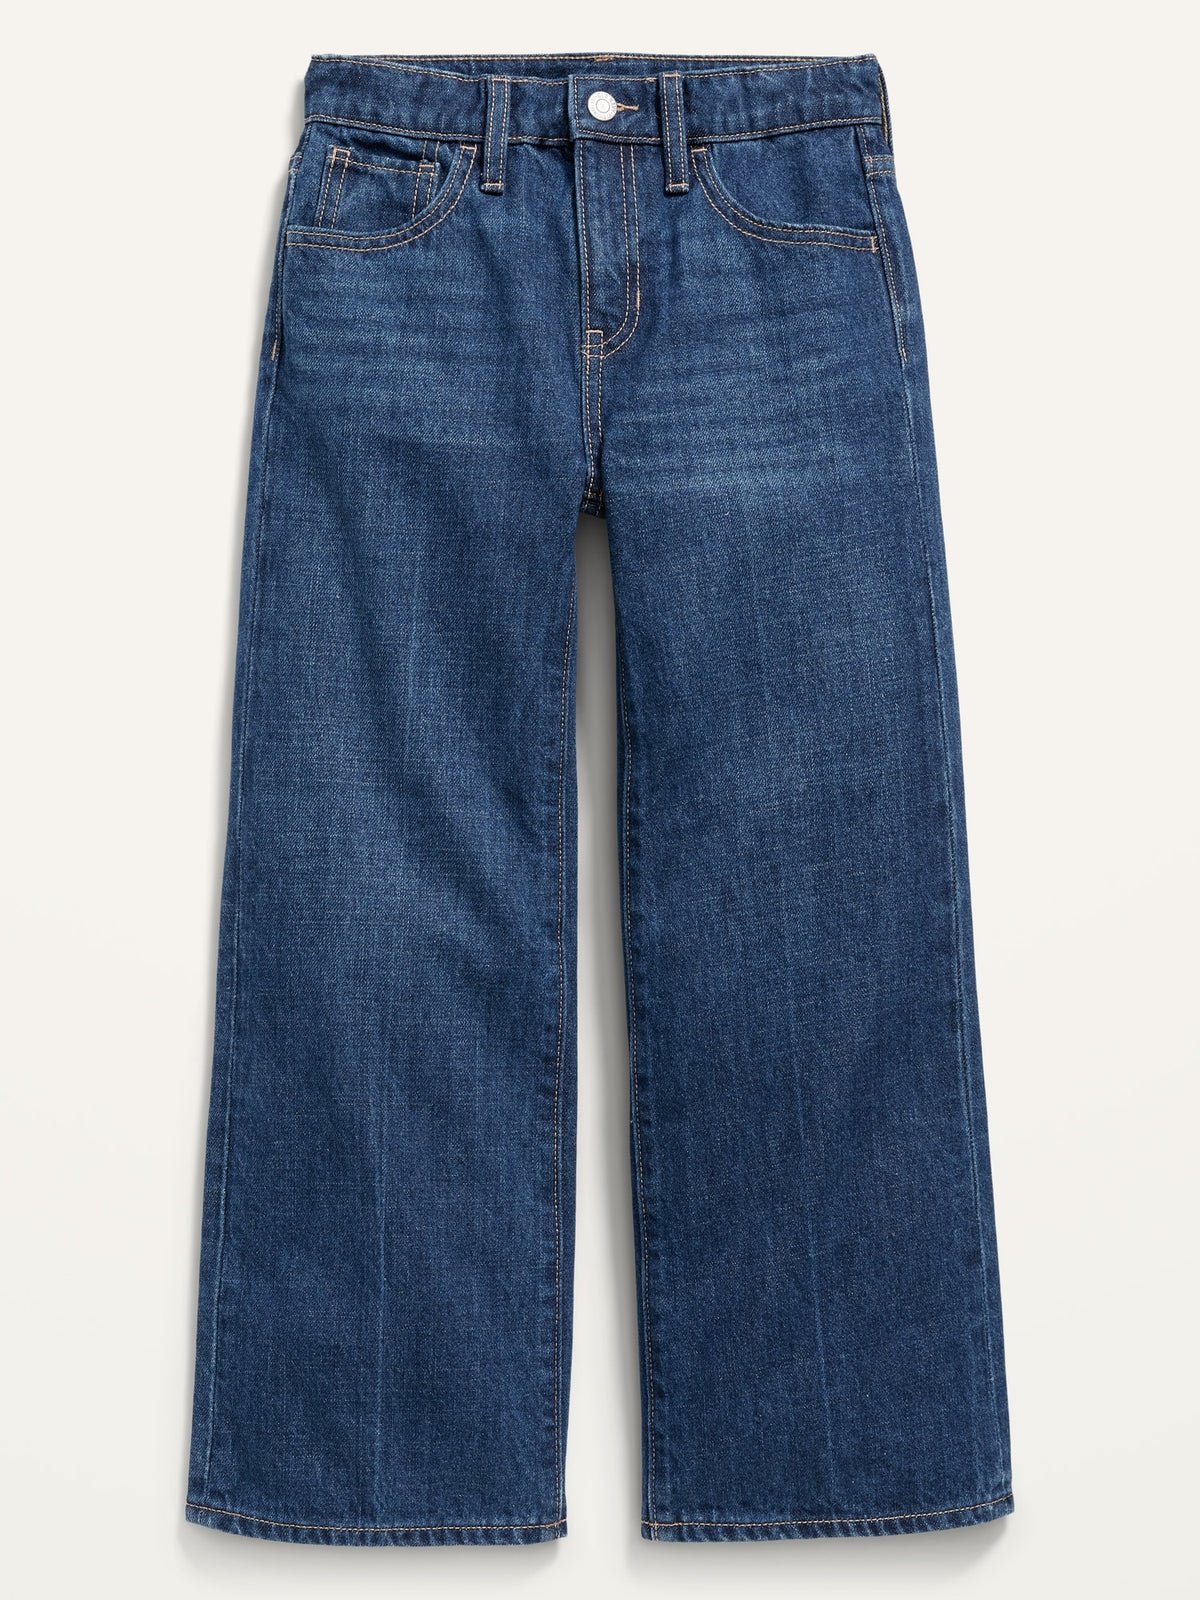 High-Waisted Slouchy Wide-Leg Jeans for Girls_MediumWash_1850.jpeg